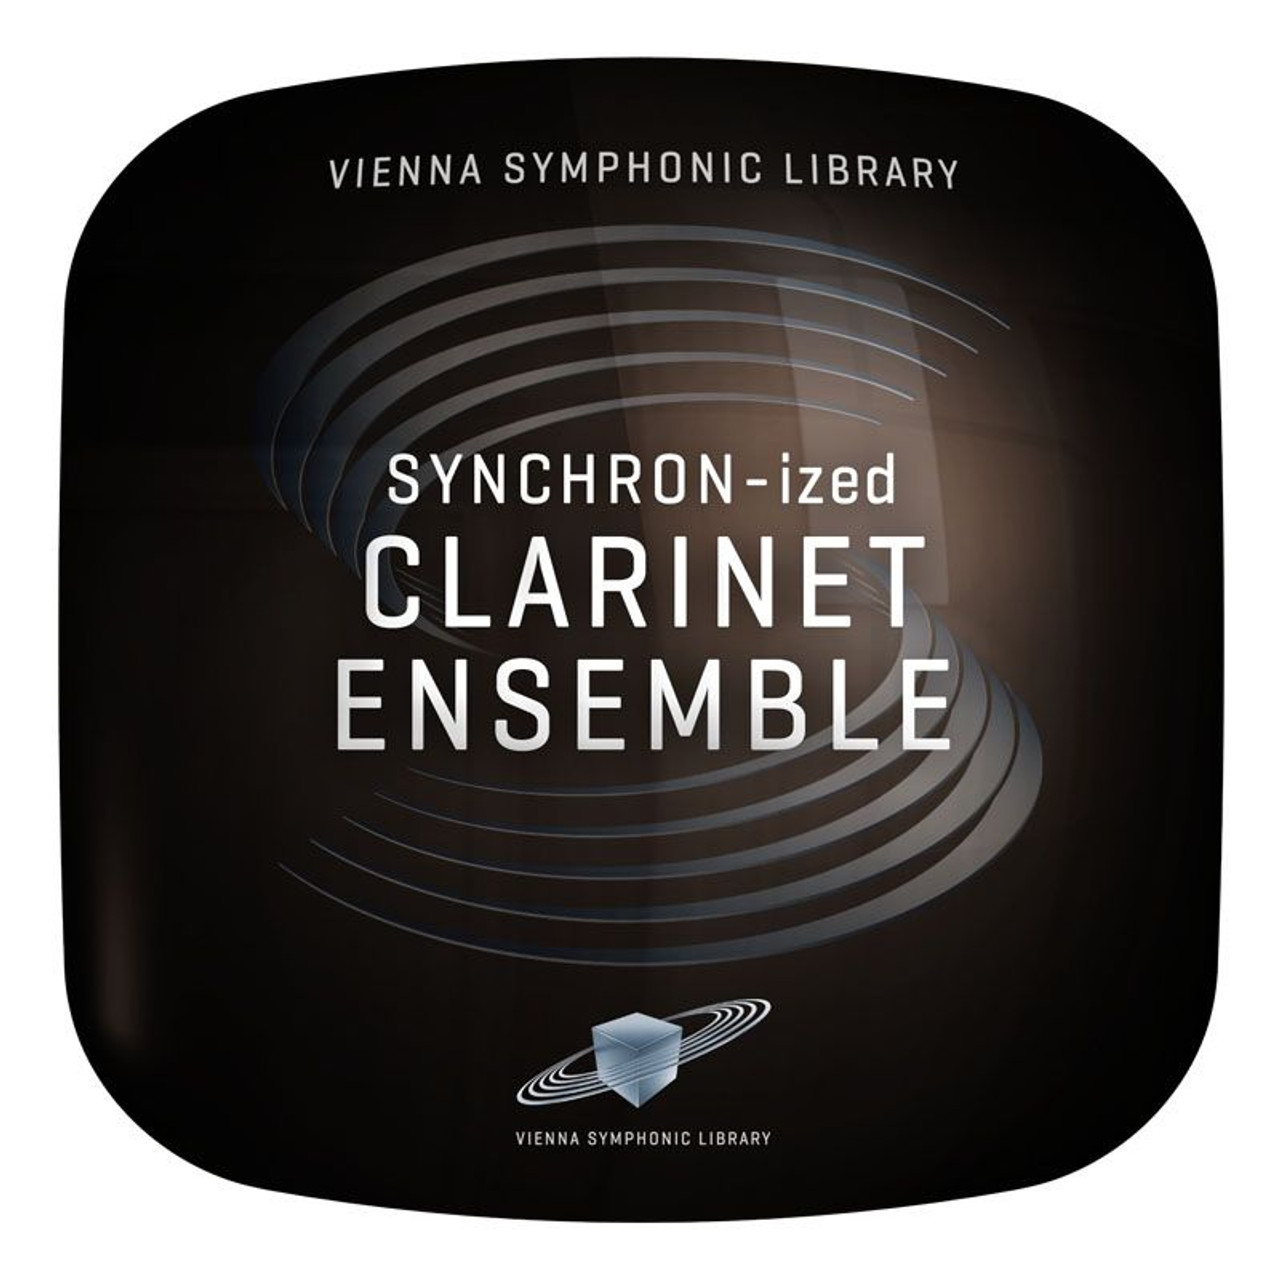 SYNCHRON-ized Clarinet Ensemble